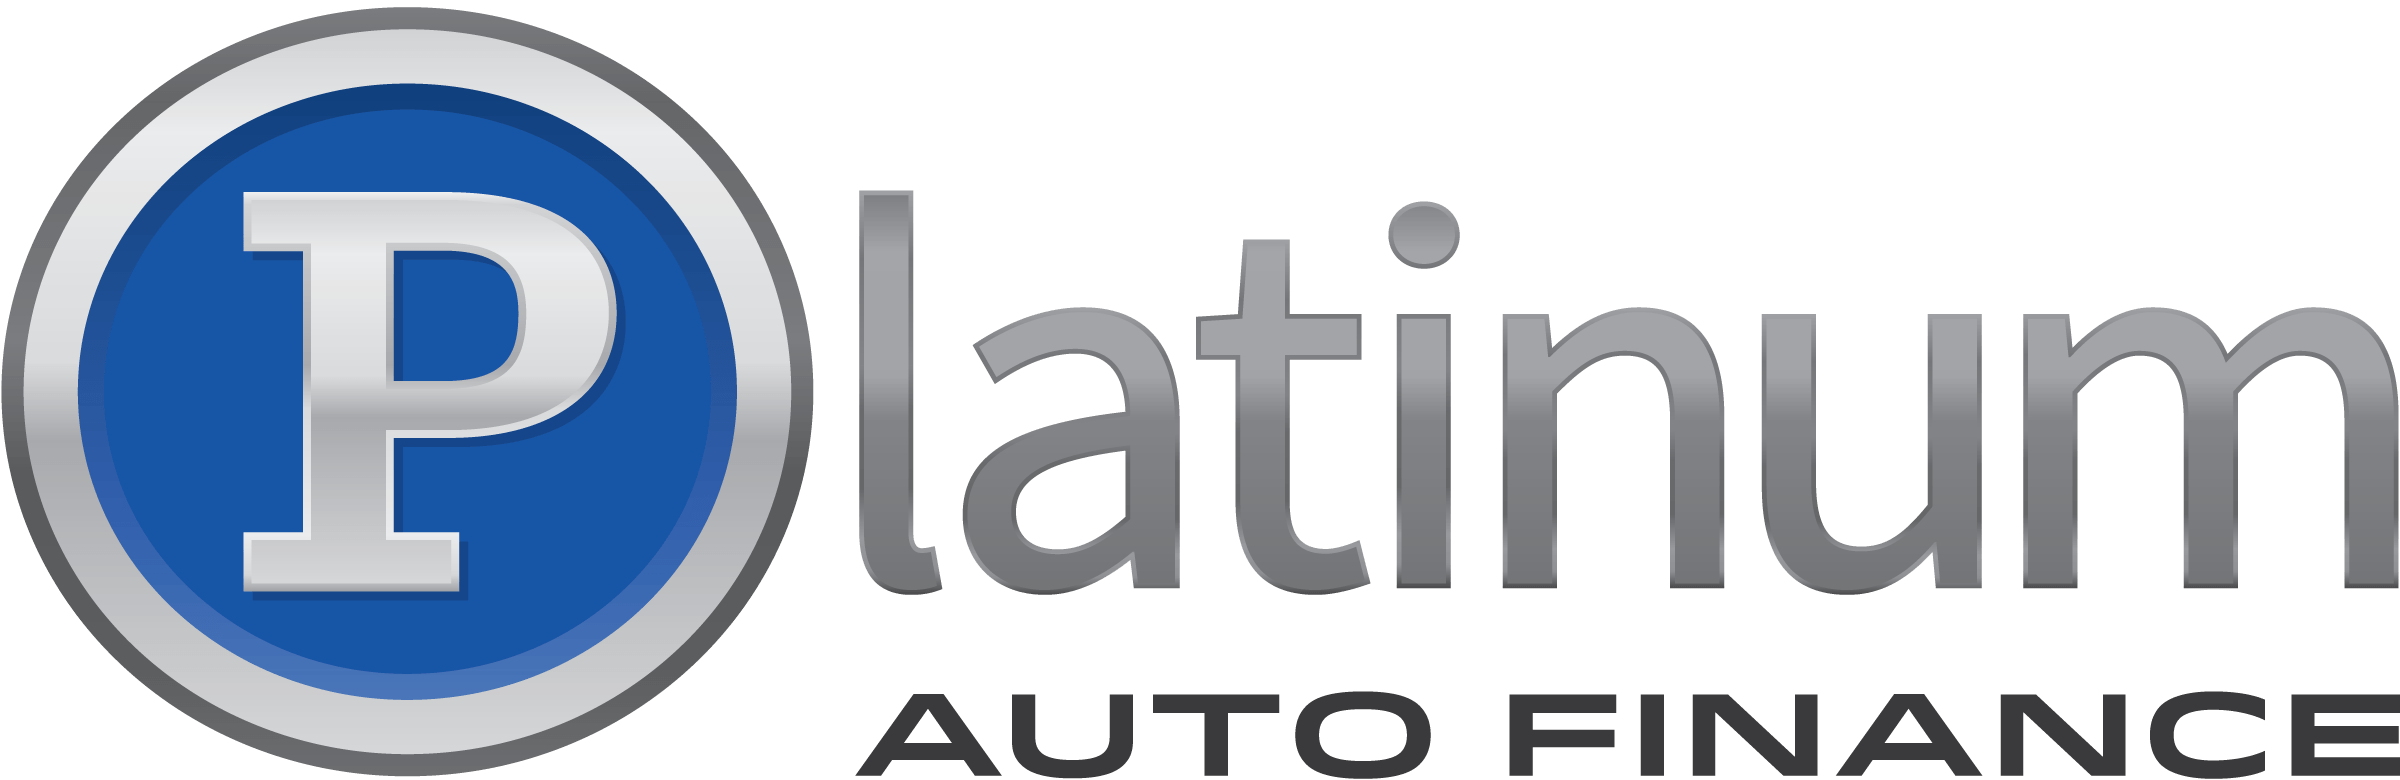 platinum auto finance logo rgb